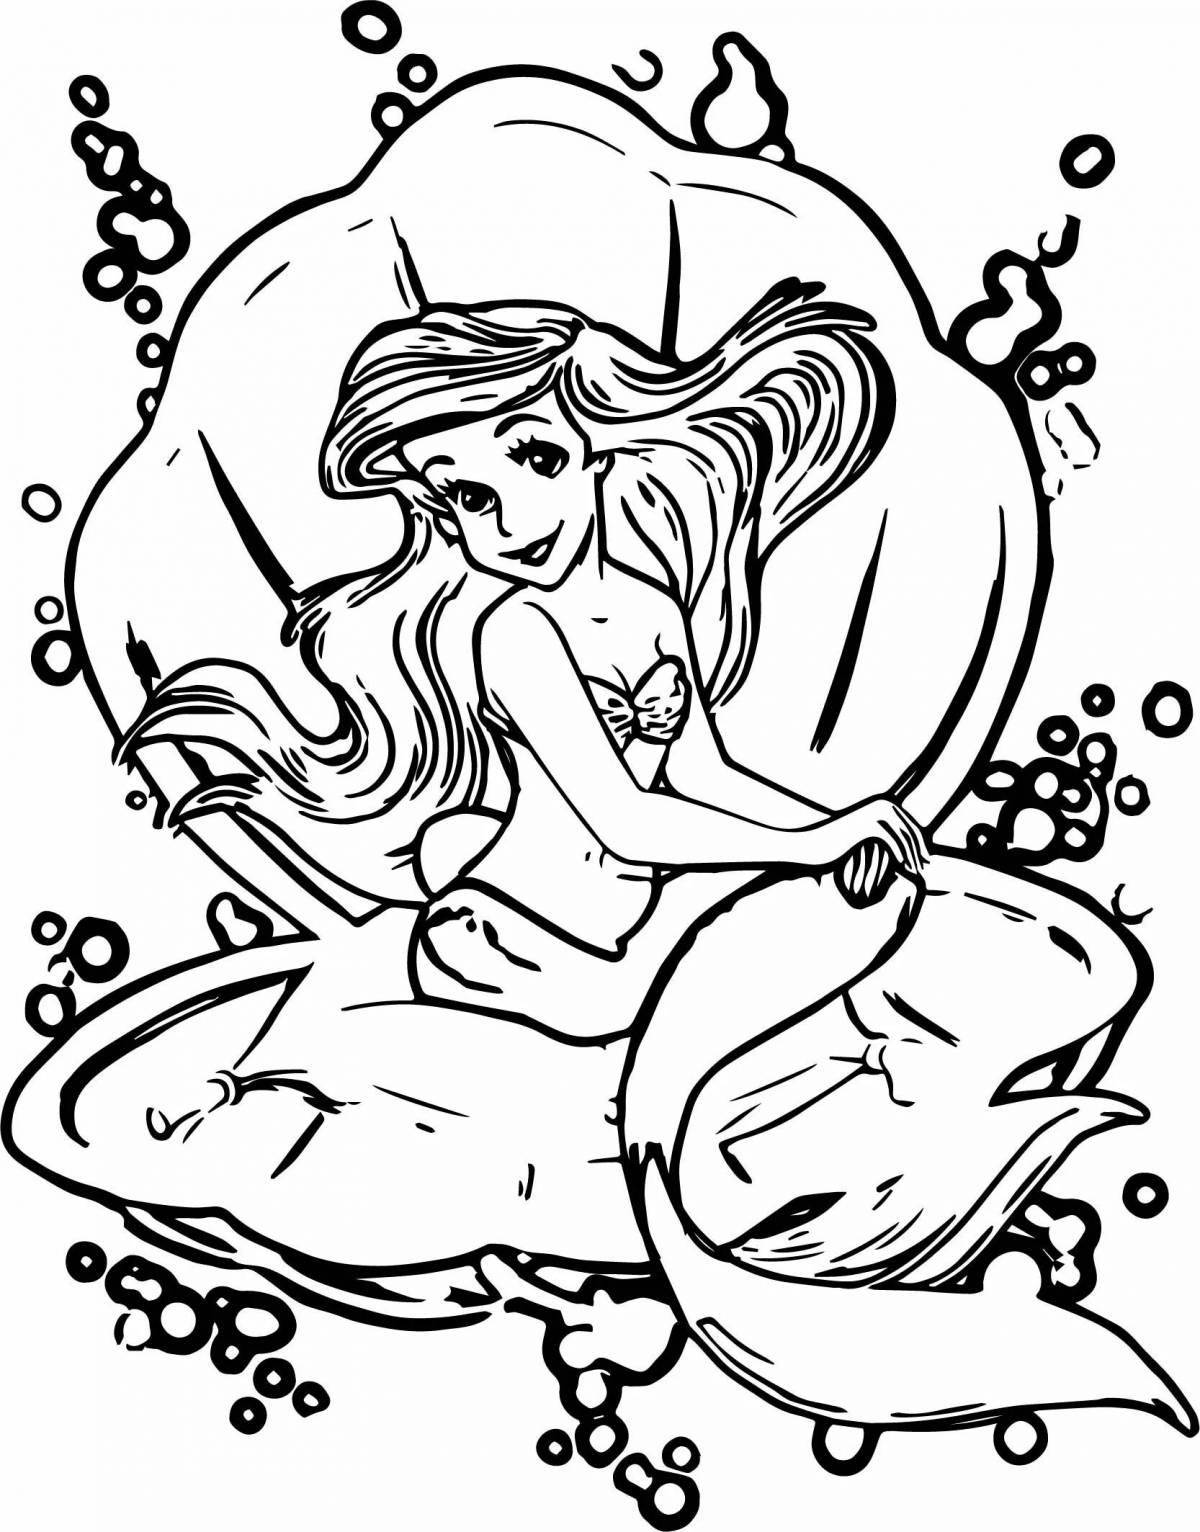 Merry little mermaid coloring by numbers